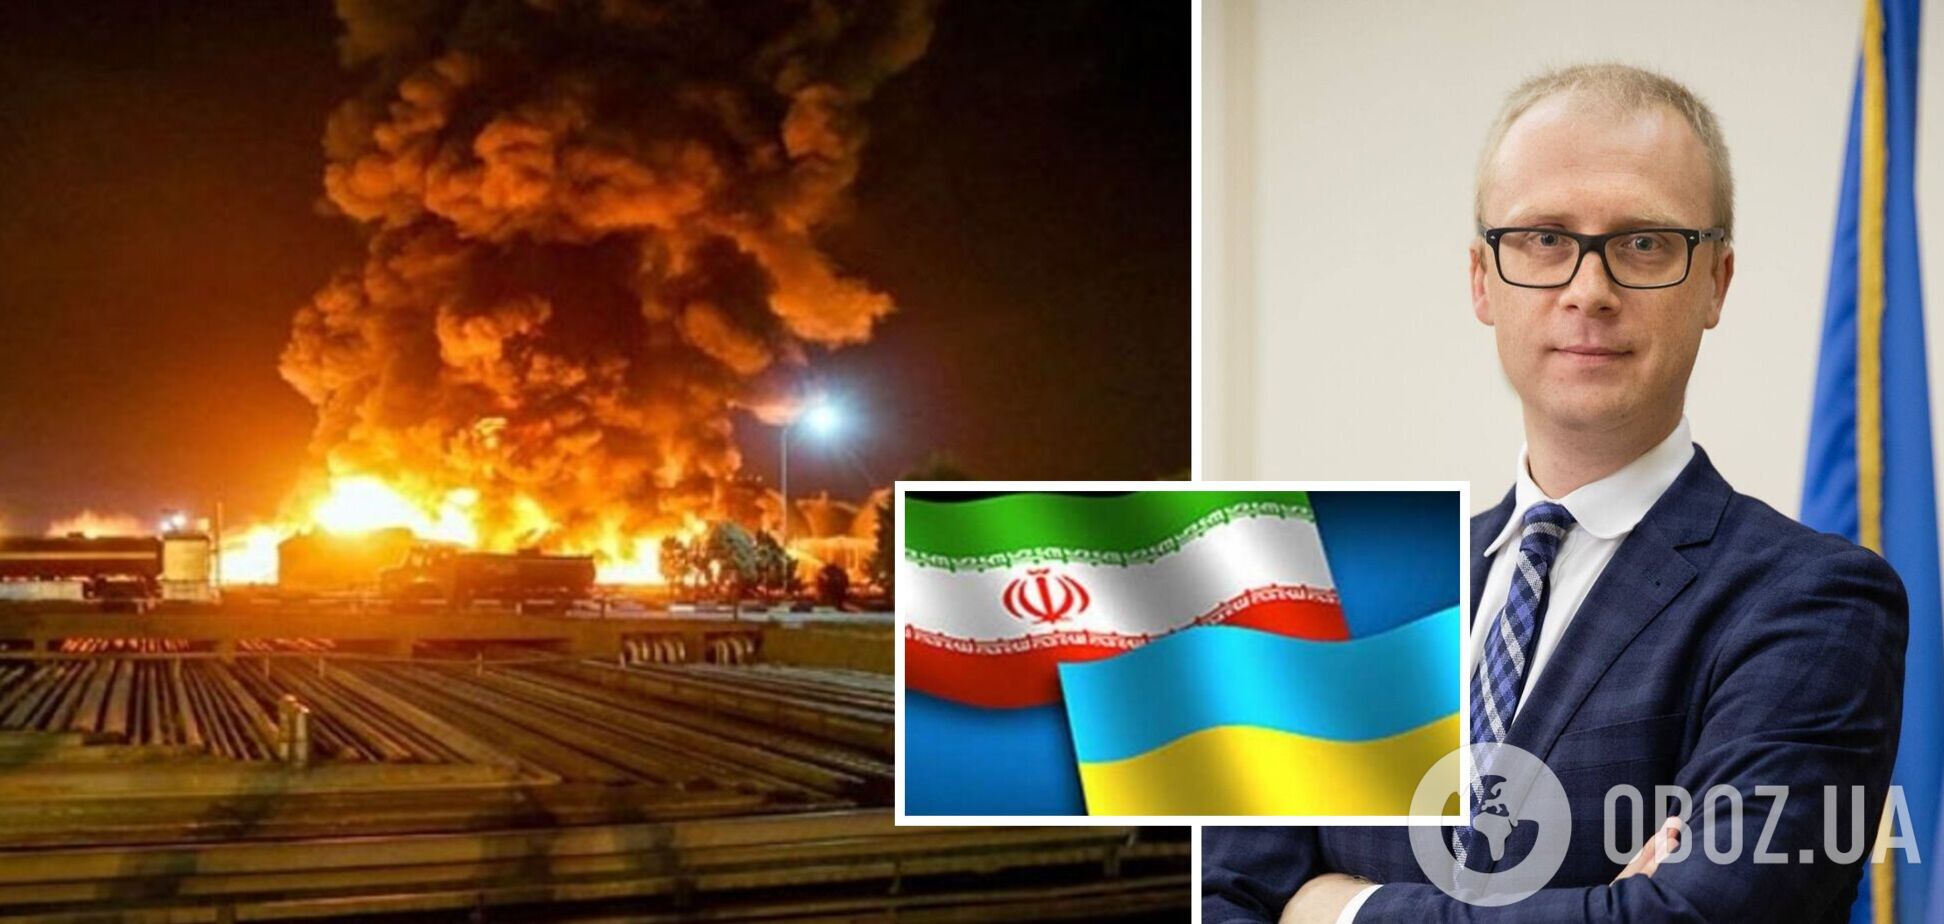 Украине неизвестна причина взрывов на иранских объектах: МИД Украины о реакции Ирана на комментарий Подоляка